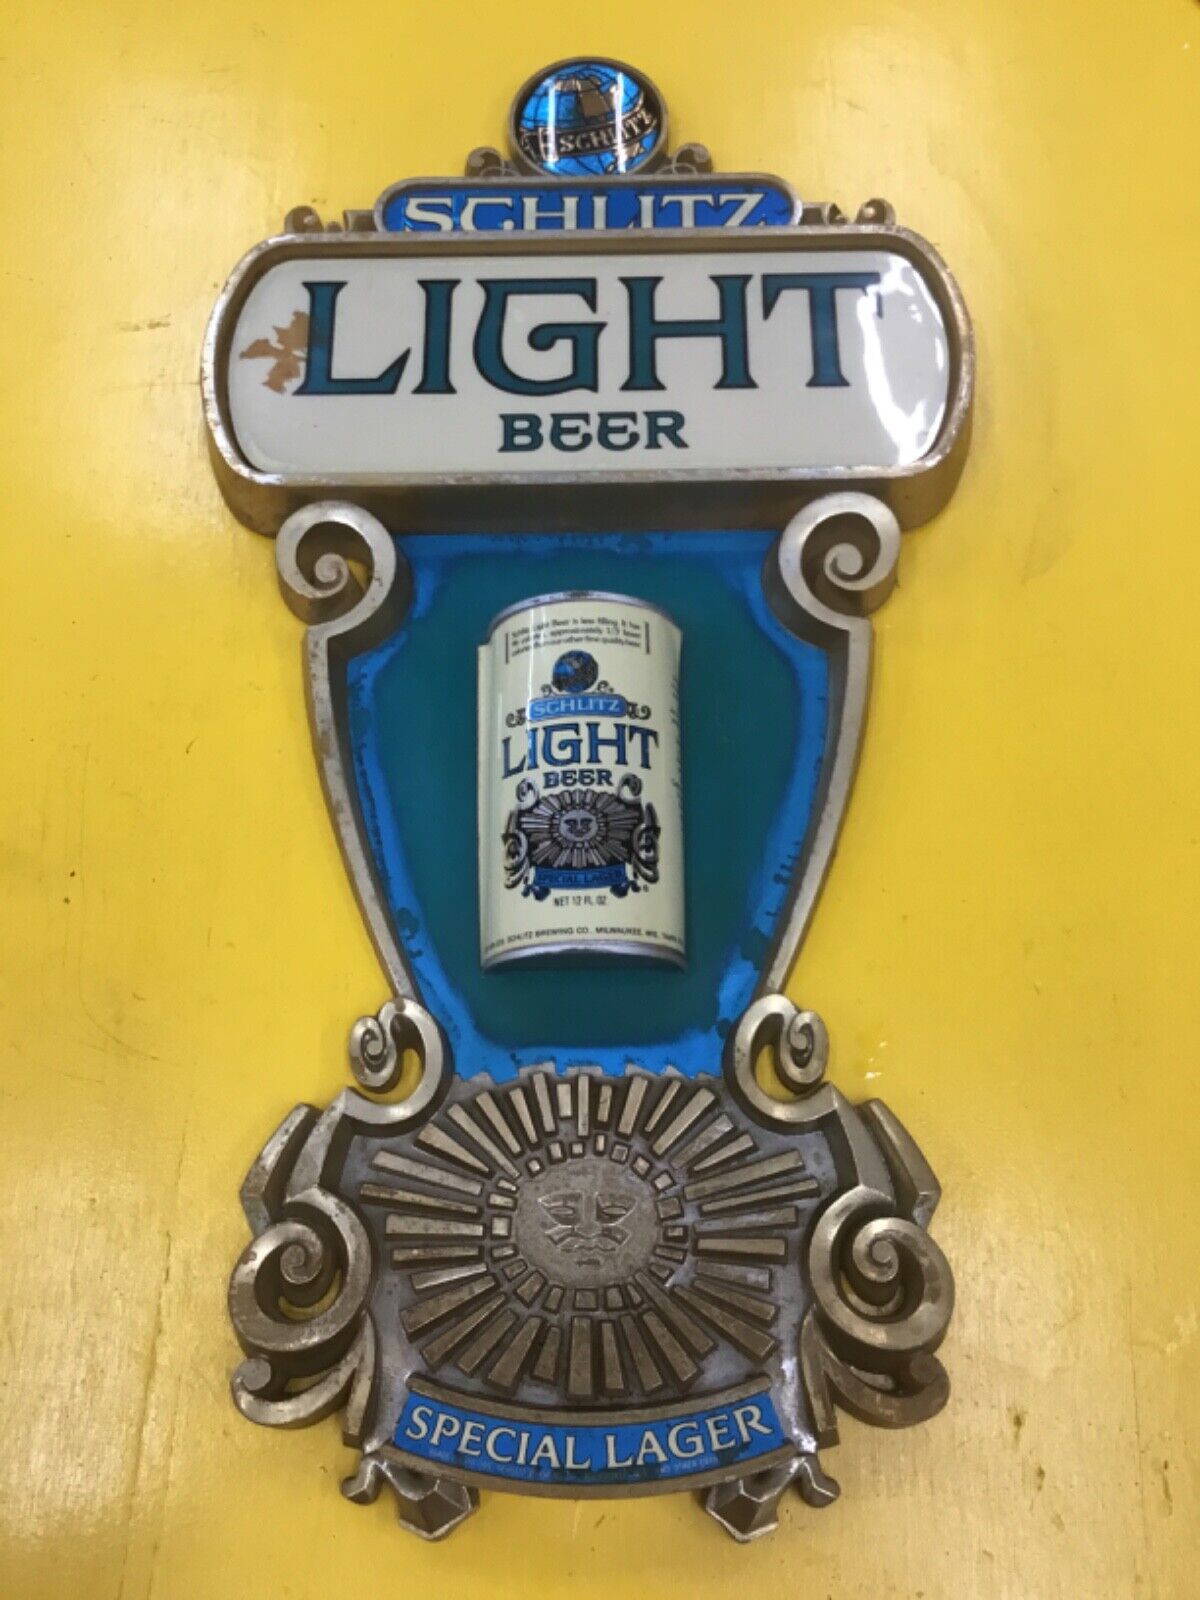 1976 Schlitz Light Beer Sunburst Sign Vintage beer advertisement mancave